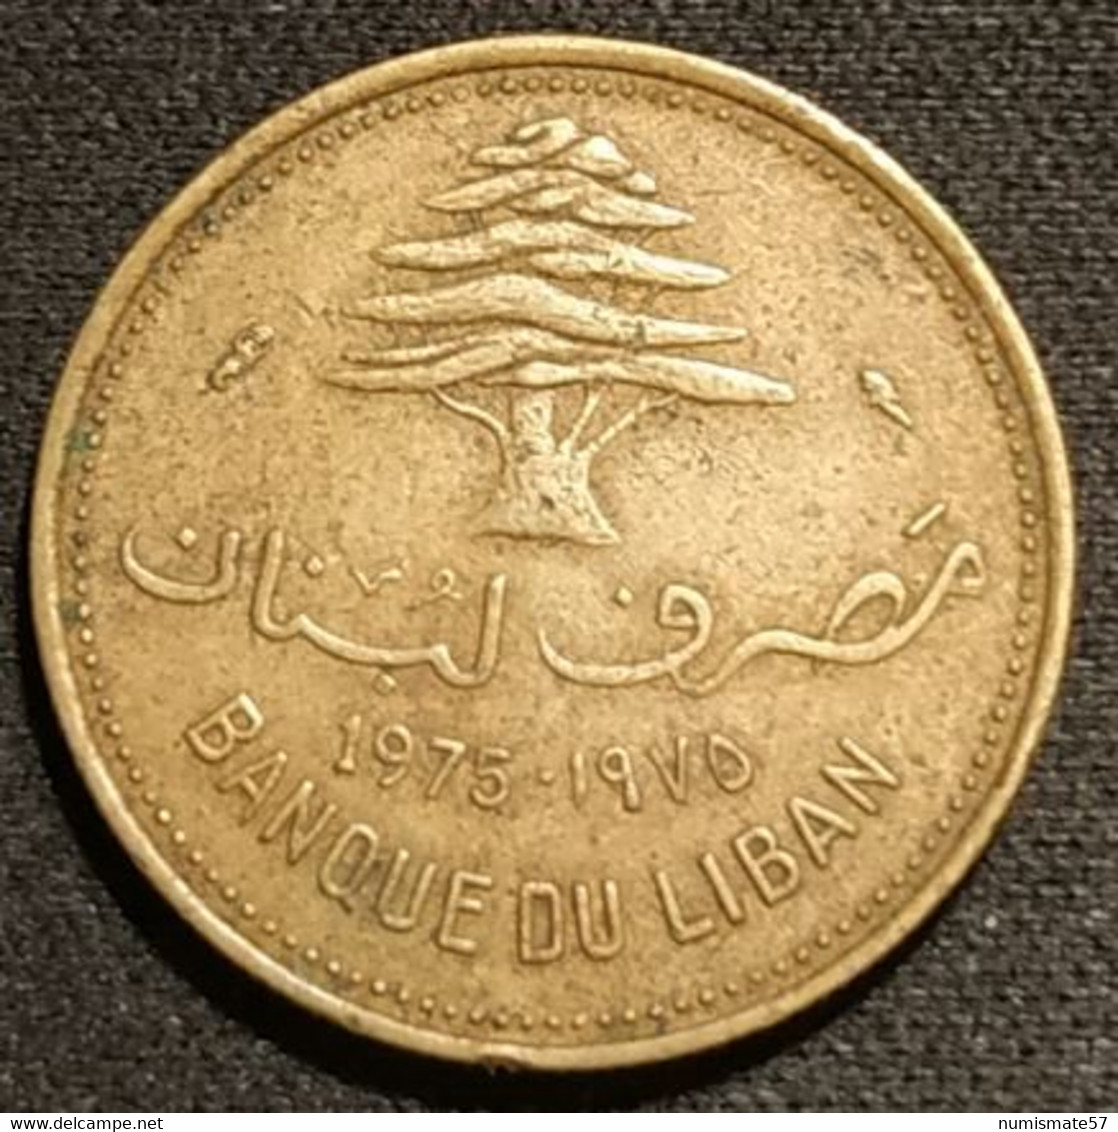 LIBAN - LEBANON - 10 PIASTRES 1975 - KM 26 - Líbano